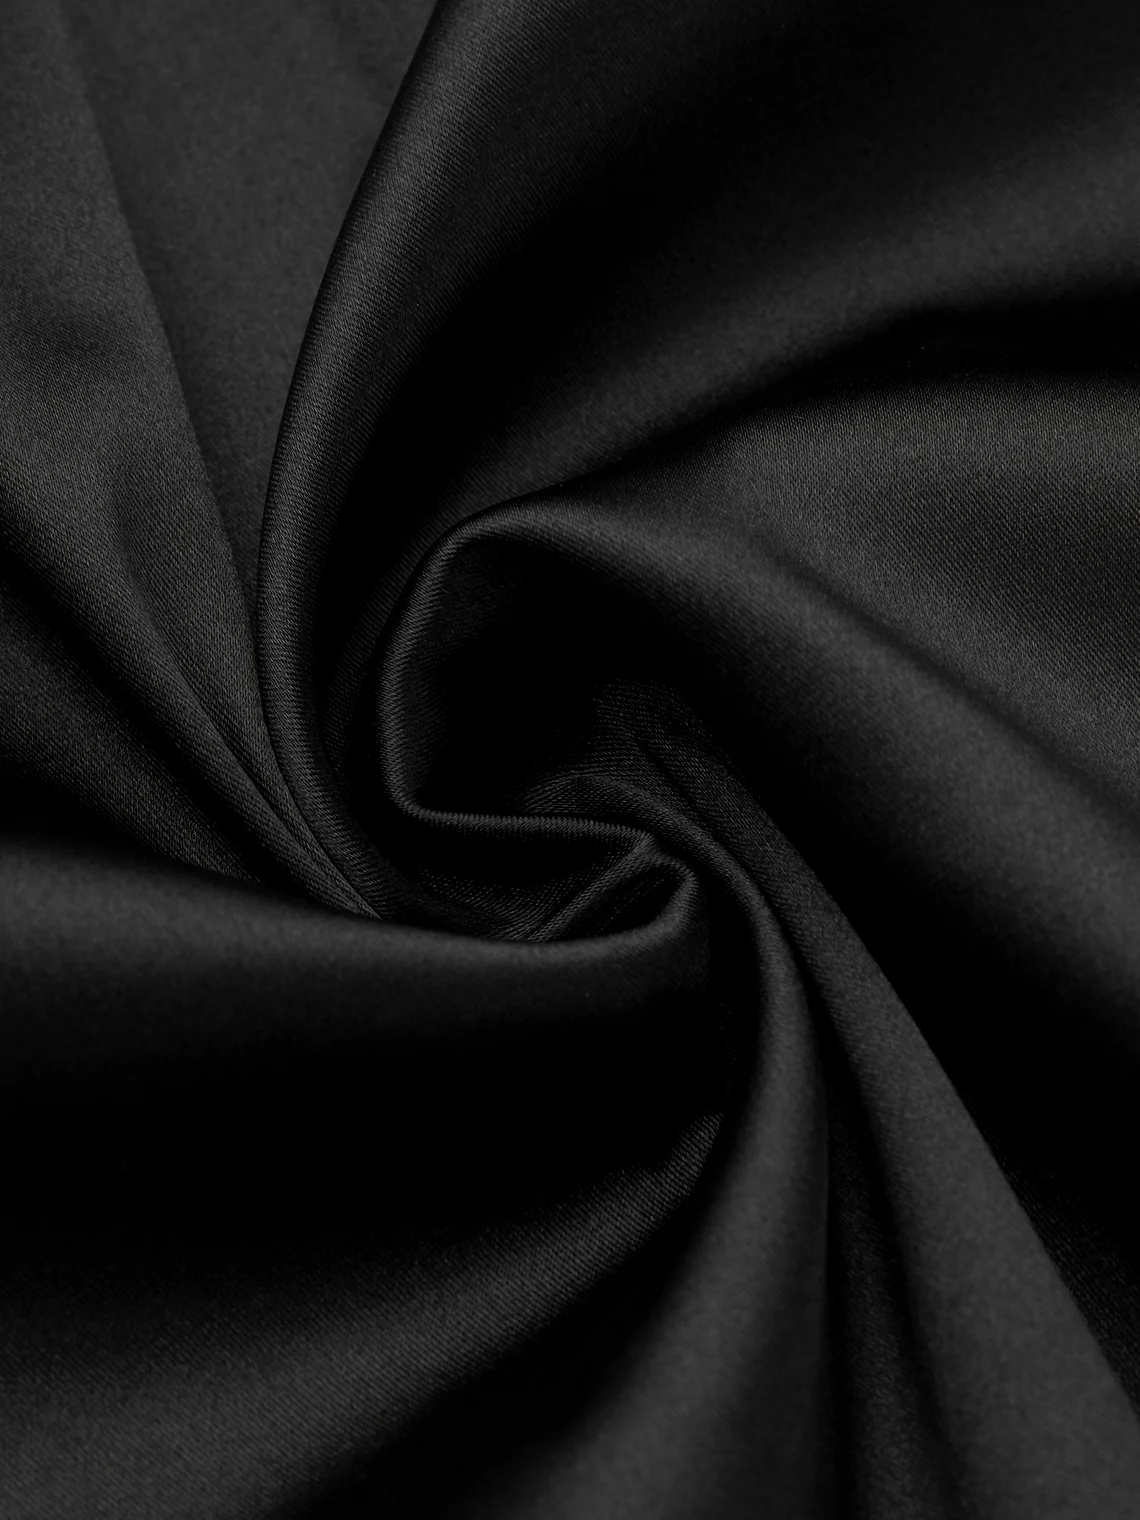 Edgy Black Lace up Dress Mini Dress | kollyy